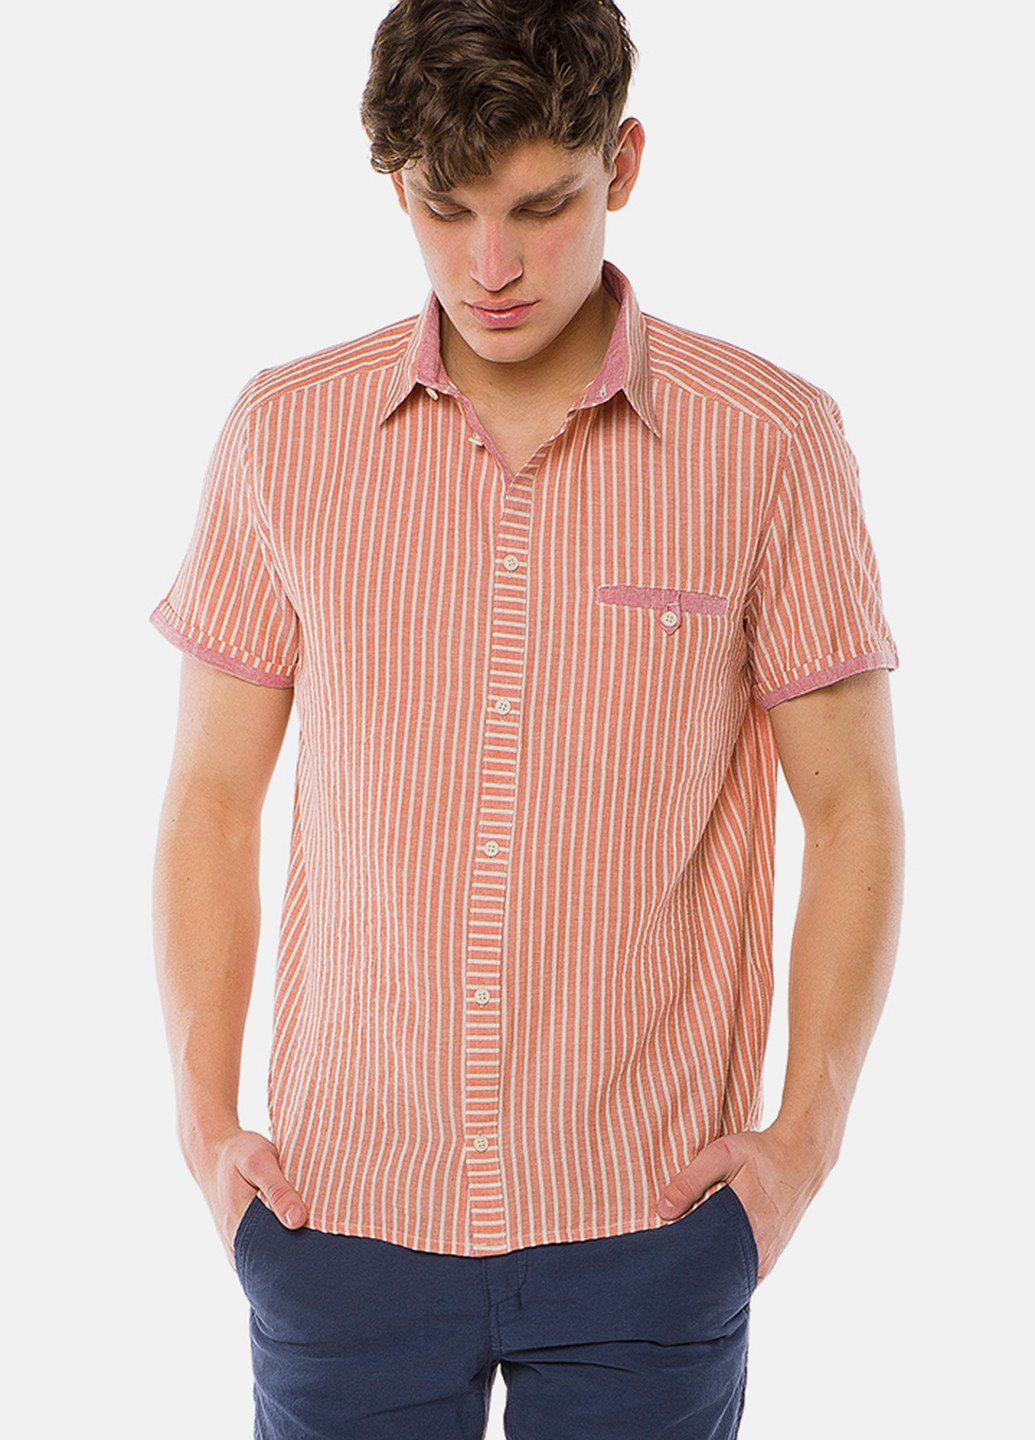 Оранжевая кэжуал рубашка с геометрическим узором MR 520 с коротким рукавом